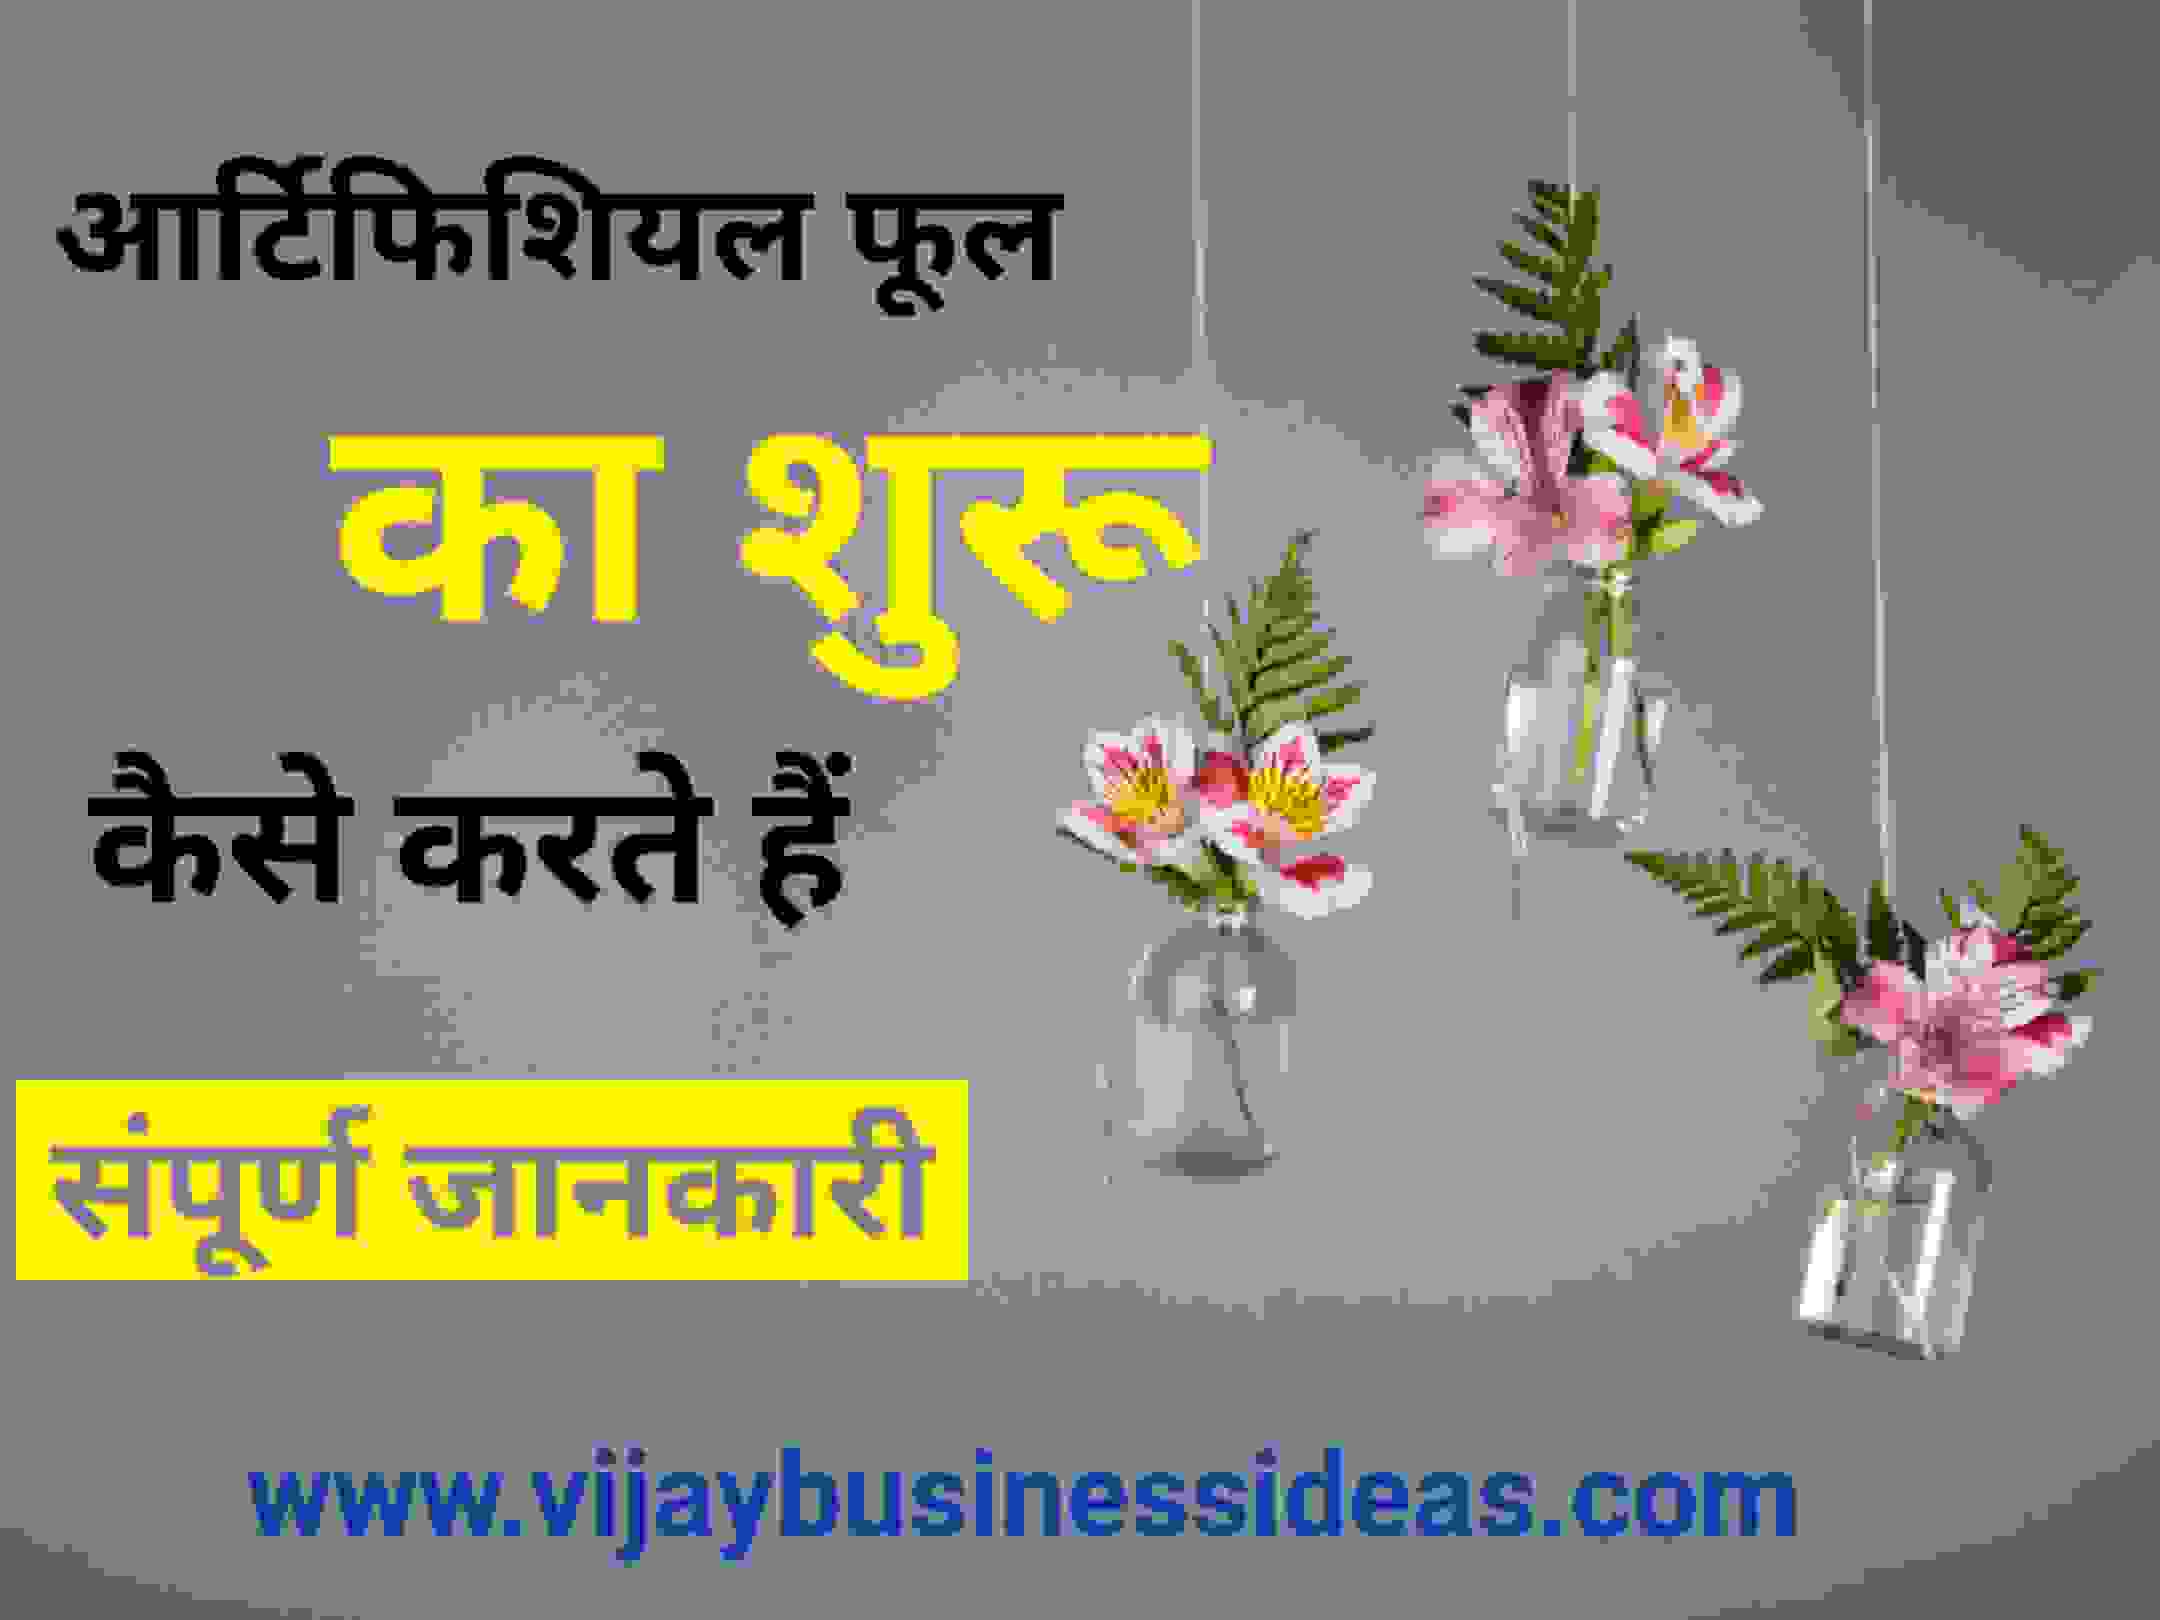 आर्टिफिशियल फ्लावर बिजनेस / artificial flower business in Hindi